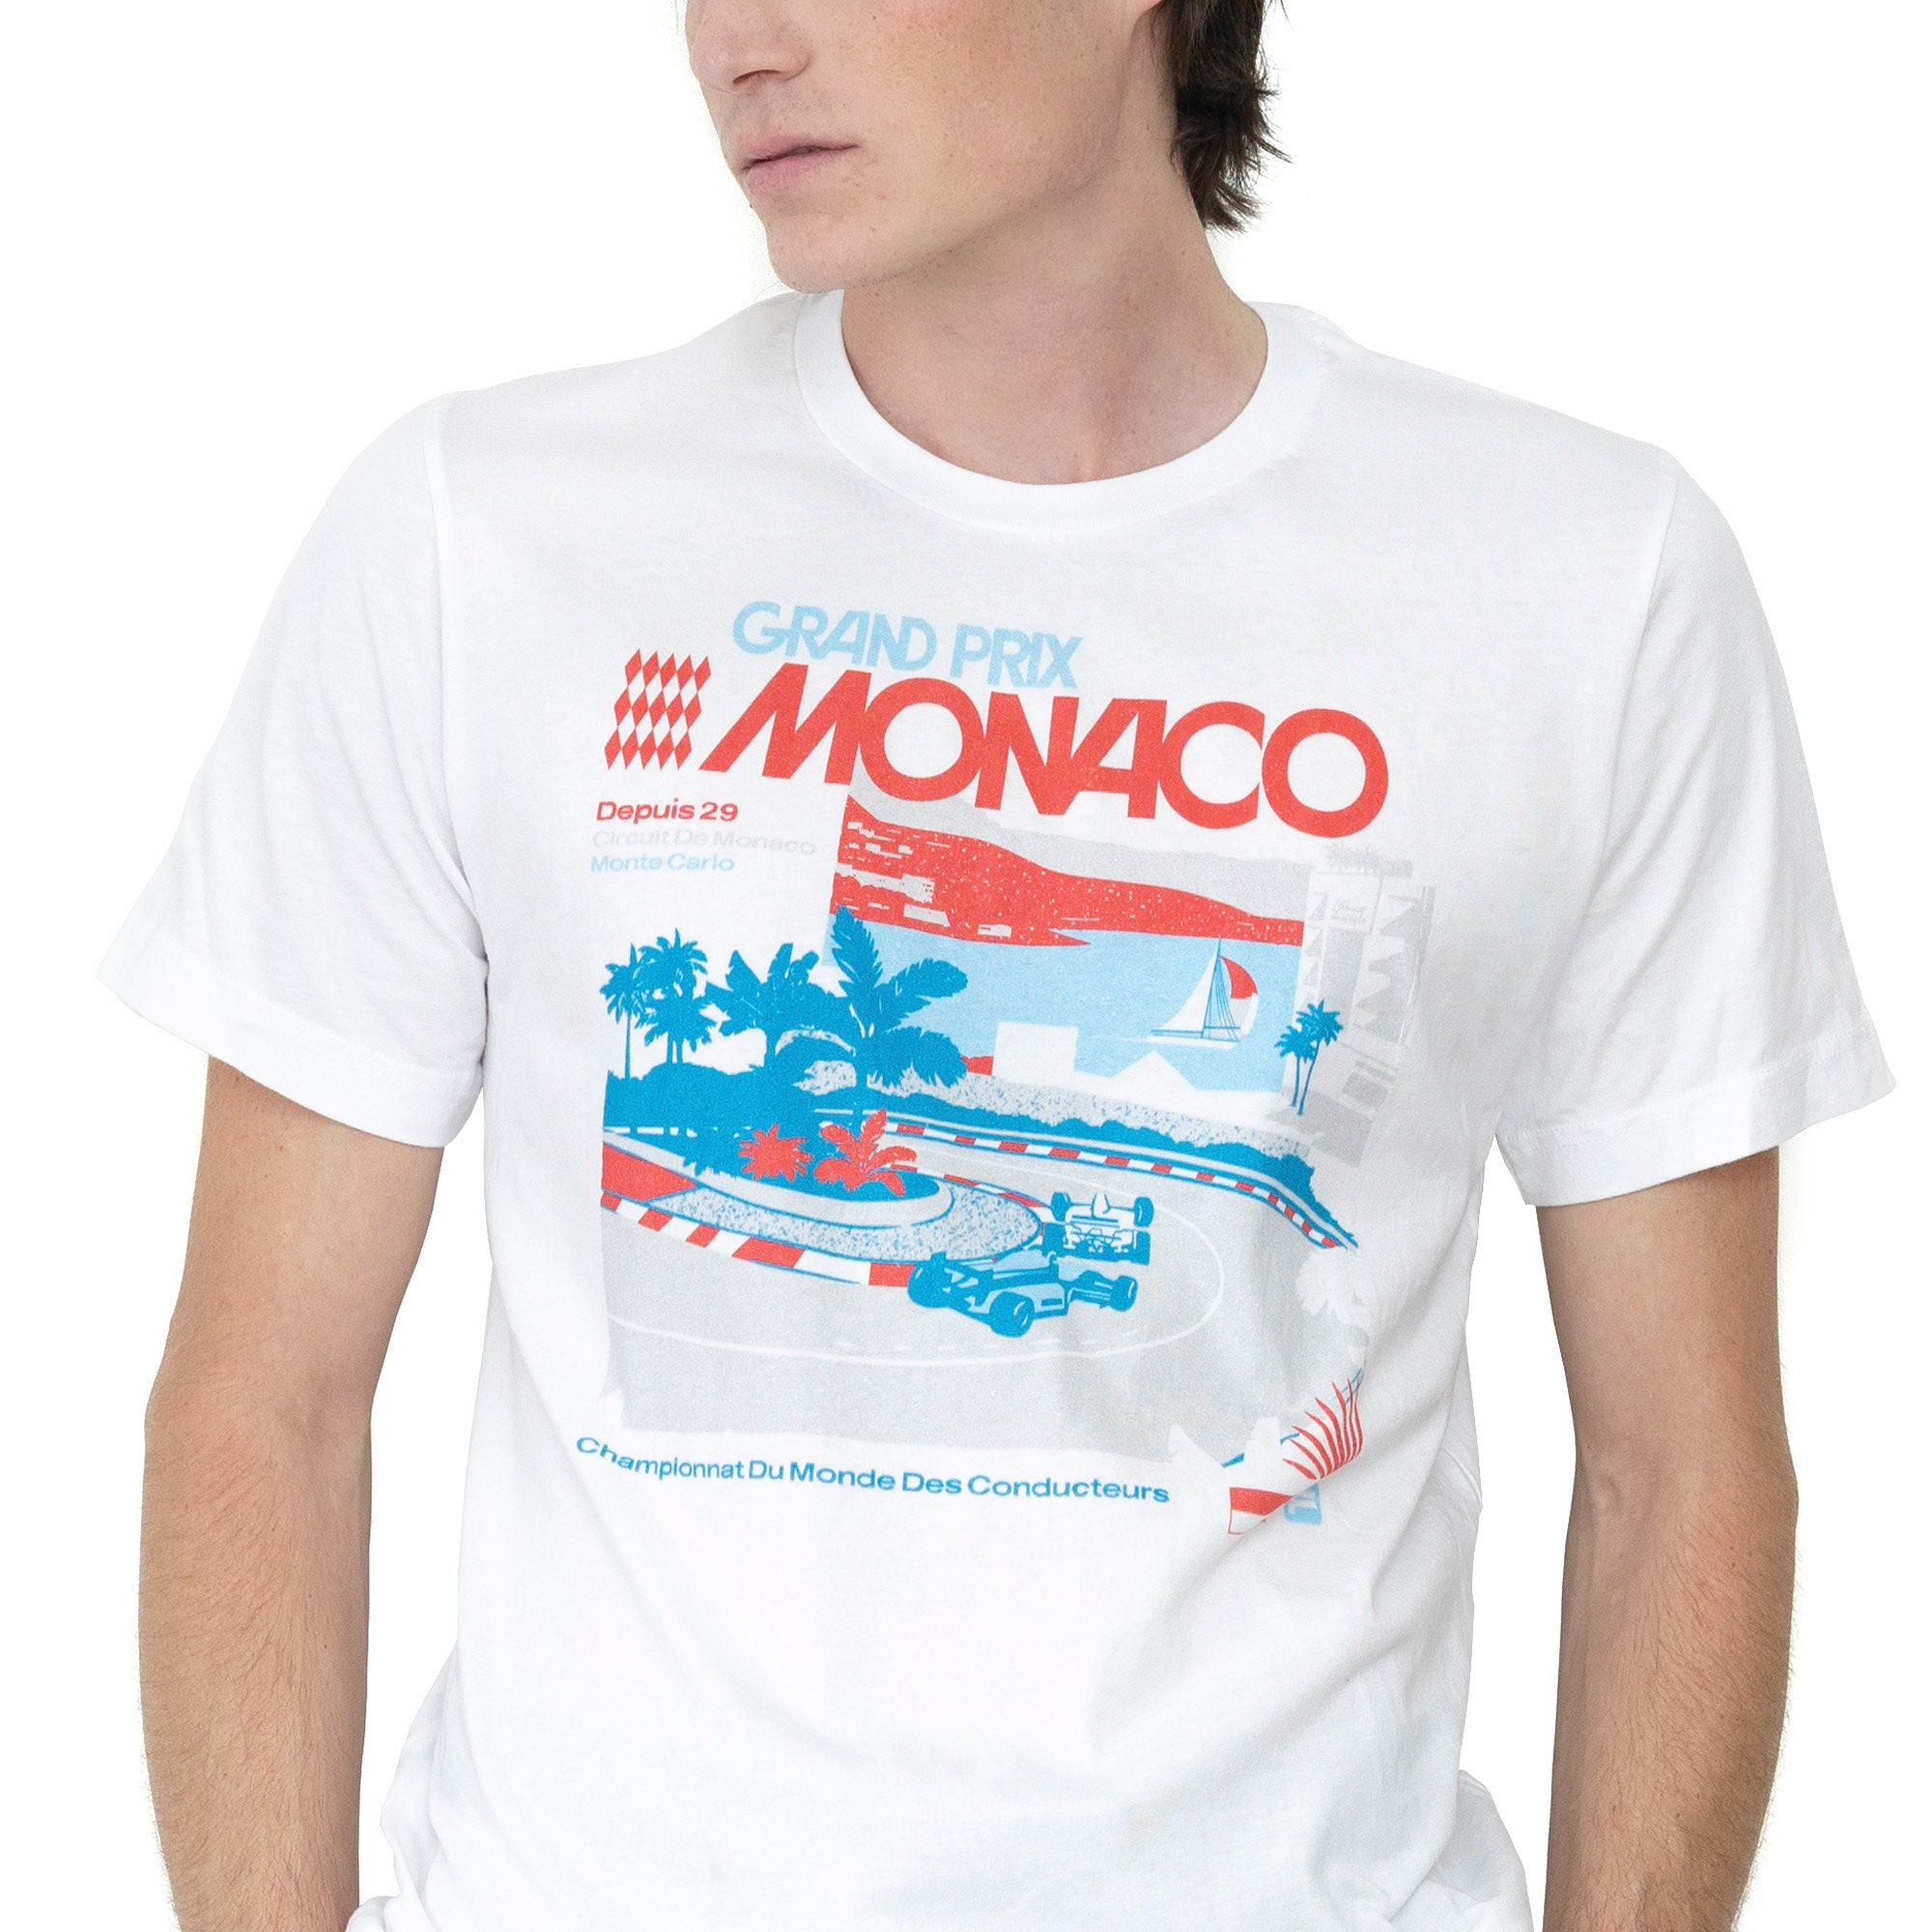 Monaco Grand Prix circuit layout: how it's changed since 1929 - Motor Sport  Magazine